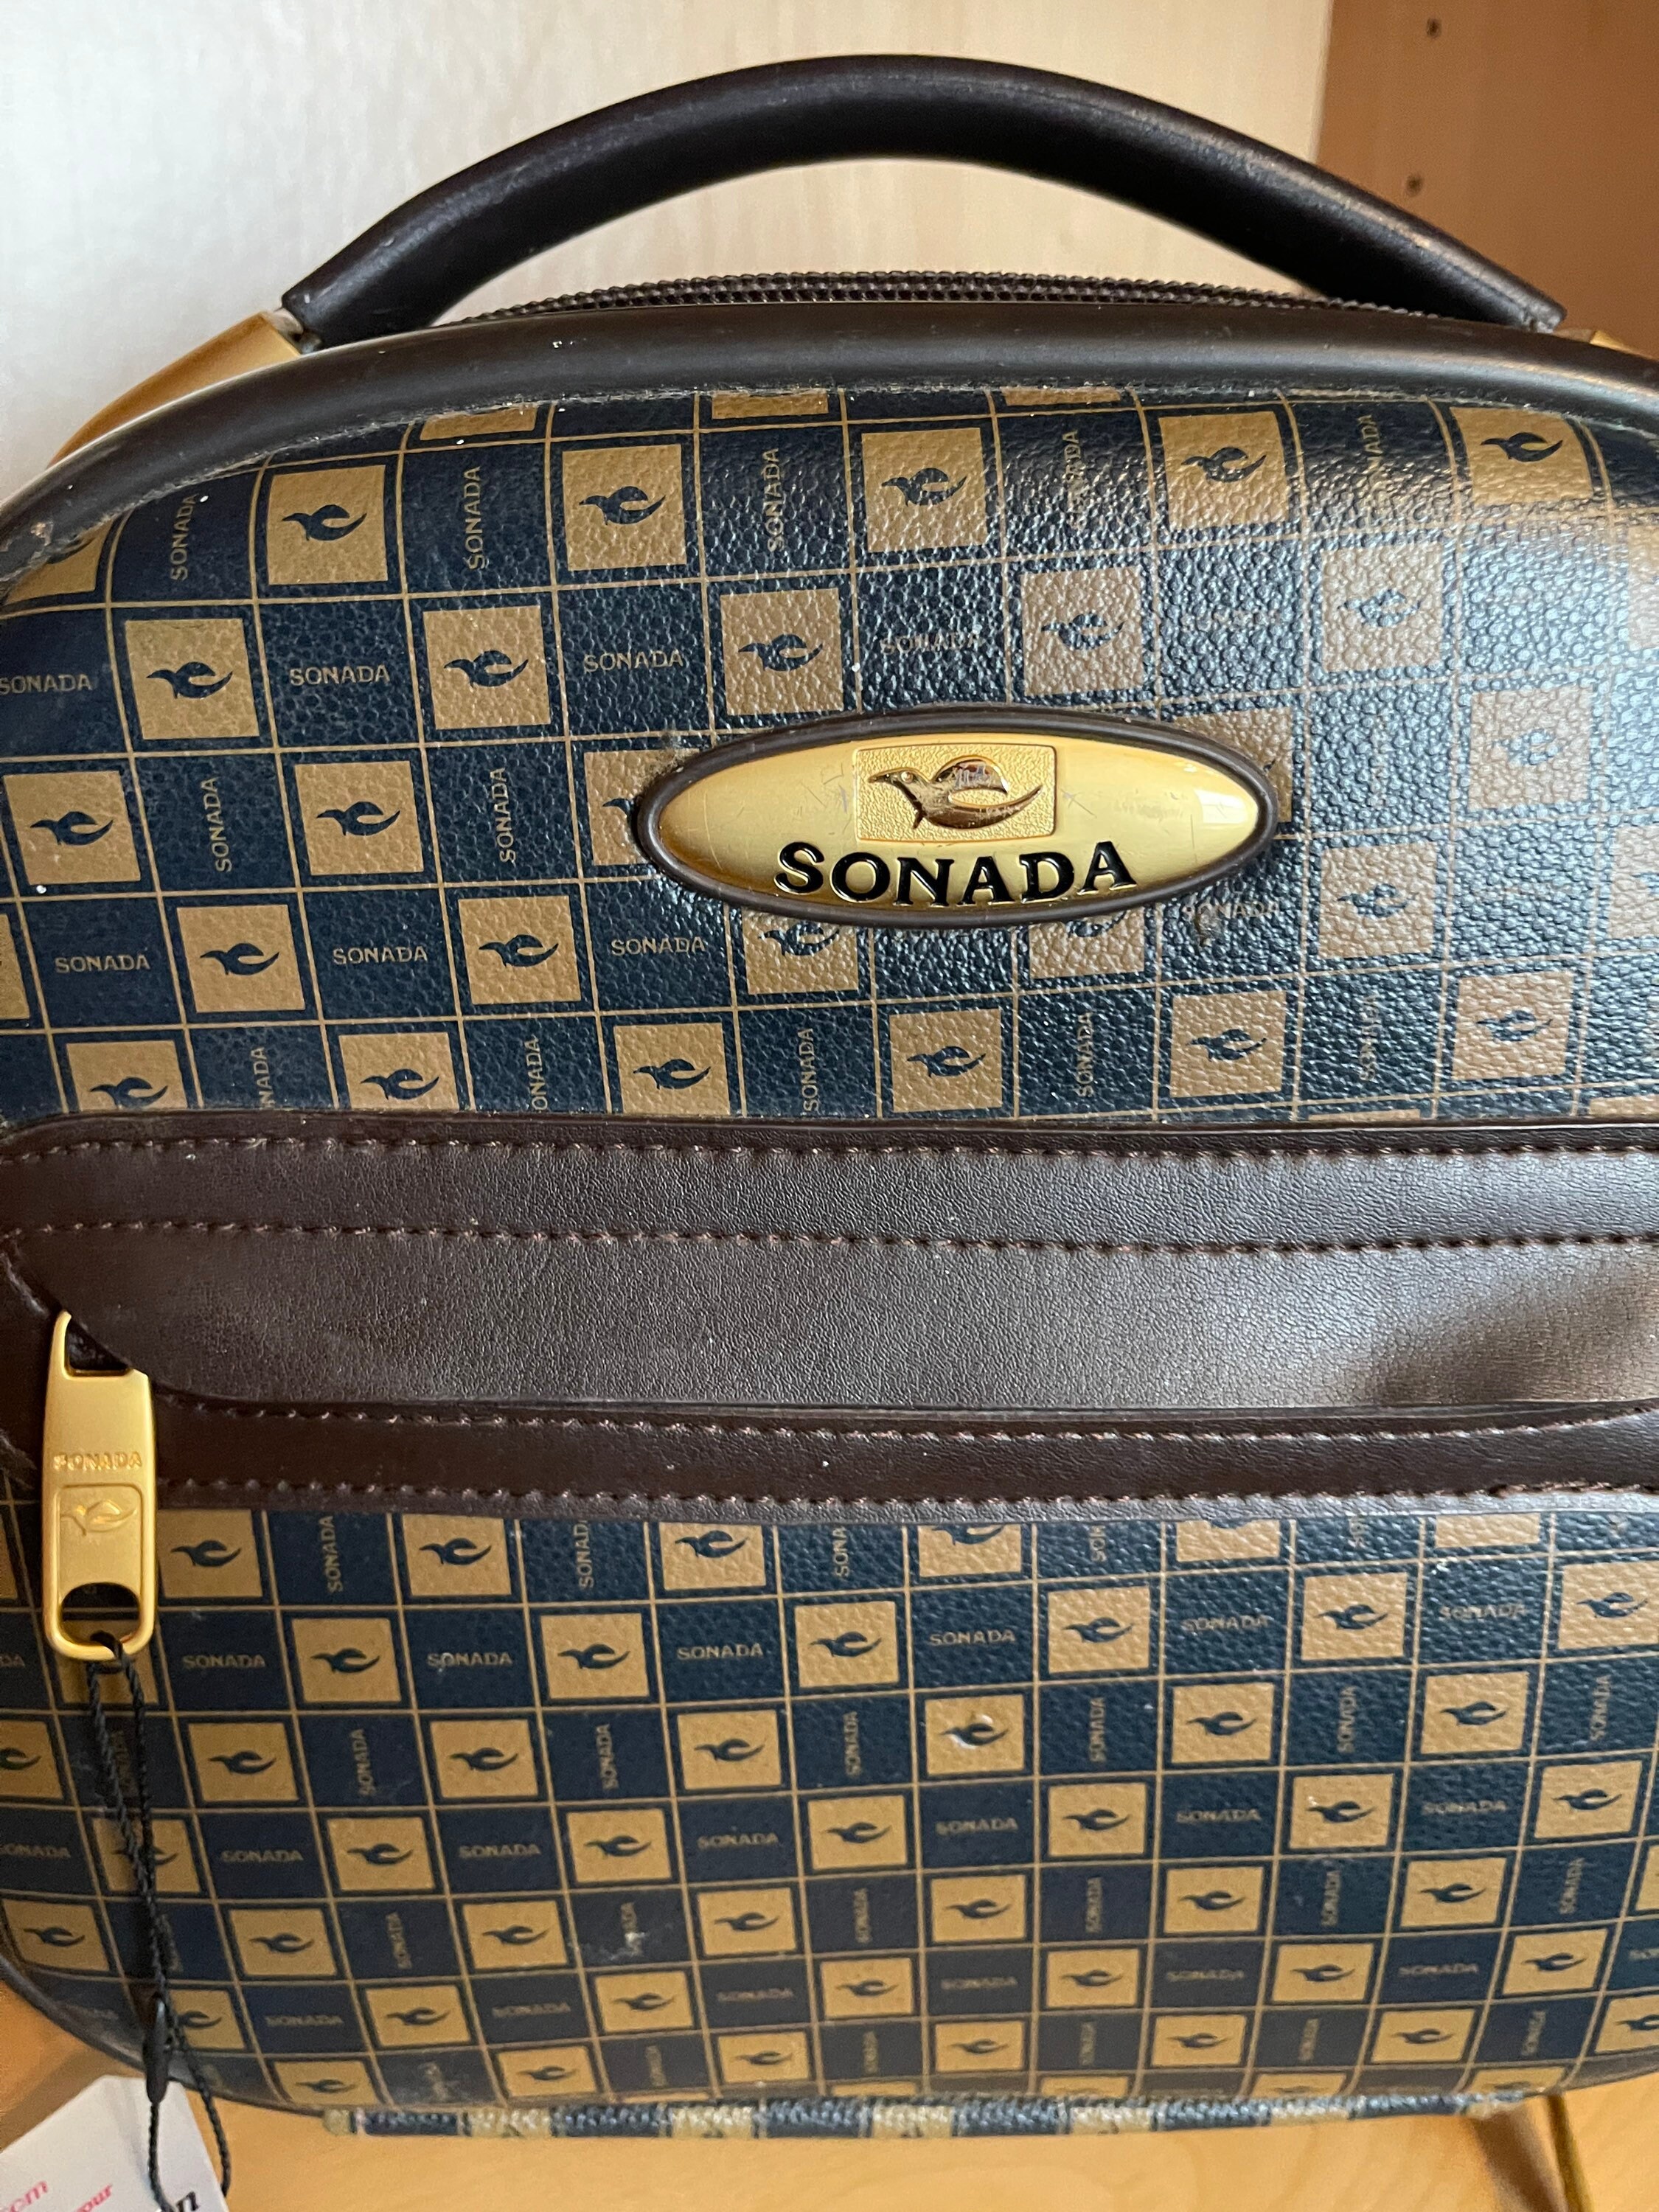 Sonada Suitcase | Property Room